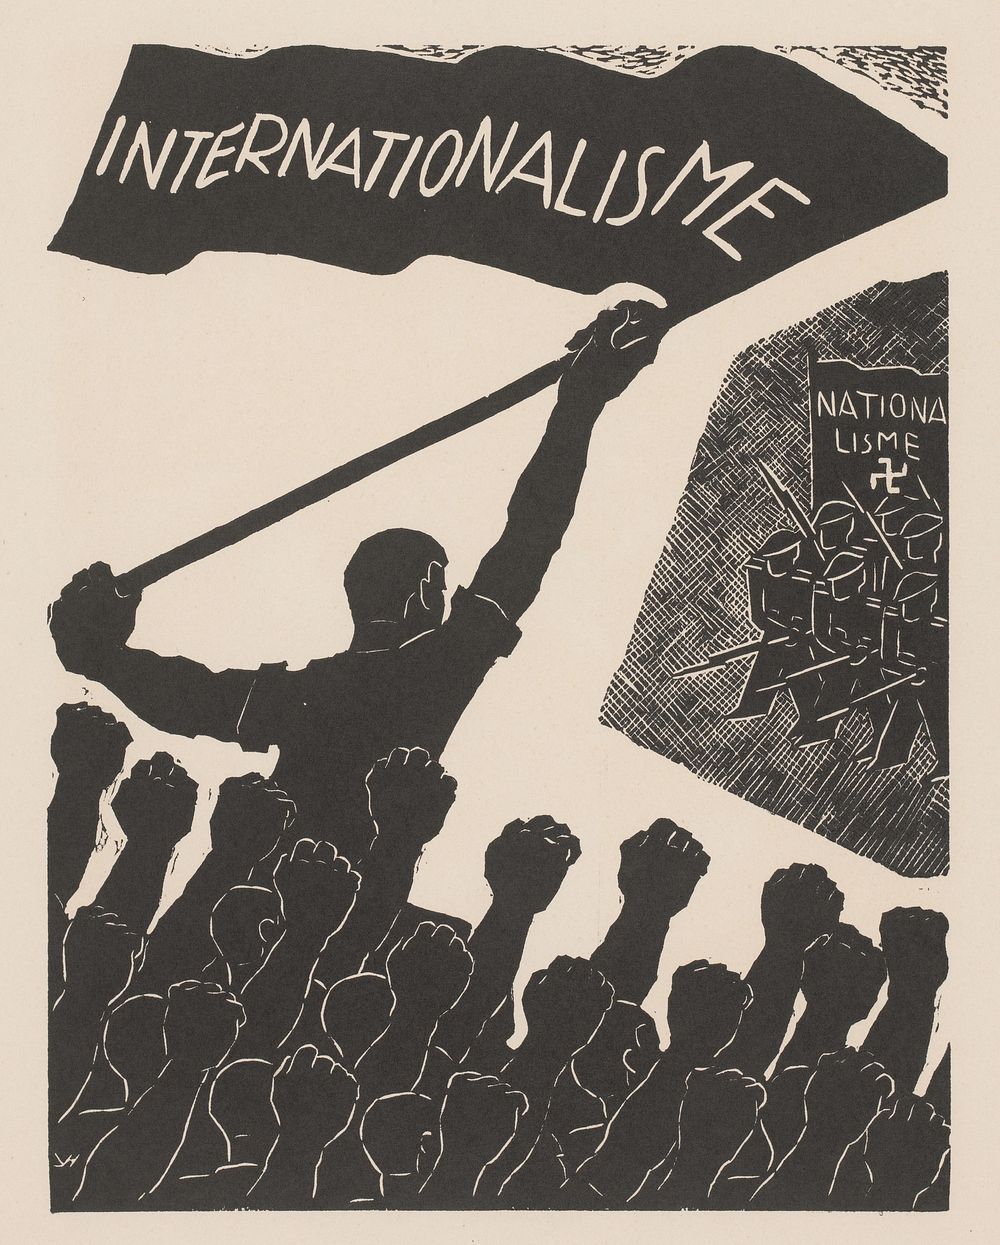 Internationalisme tegenover Nationaal-socialisme (1933) by Johan van Hell and Collectief Roode Prenten